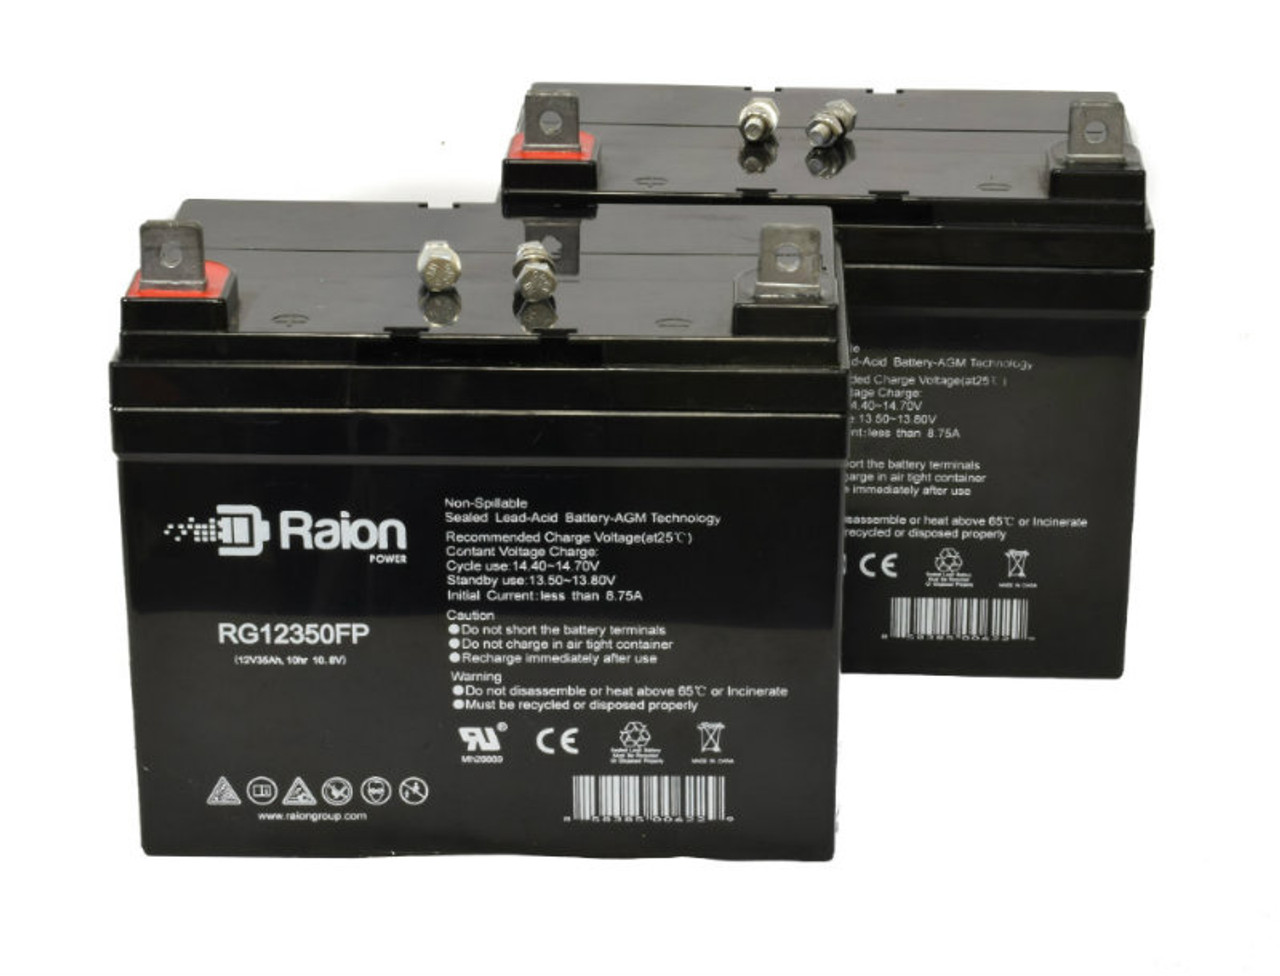 Raion Power Replacement 12V 35Ah Lawn Mower Battery for John Deere 170 - 2 Pack